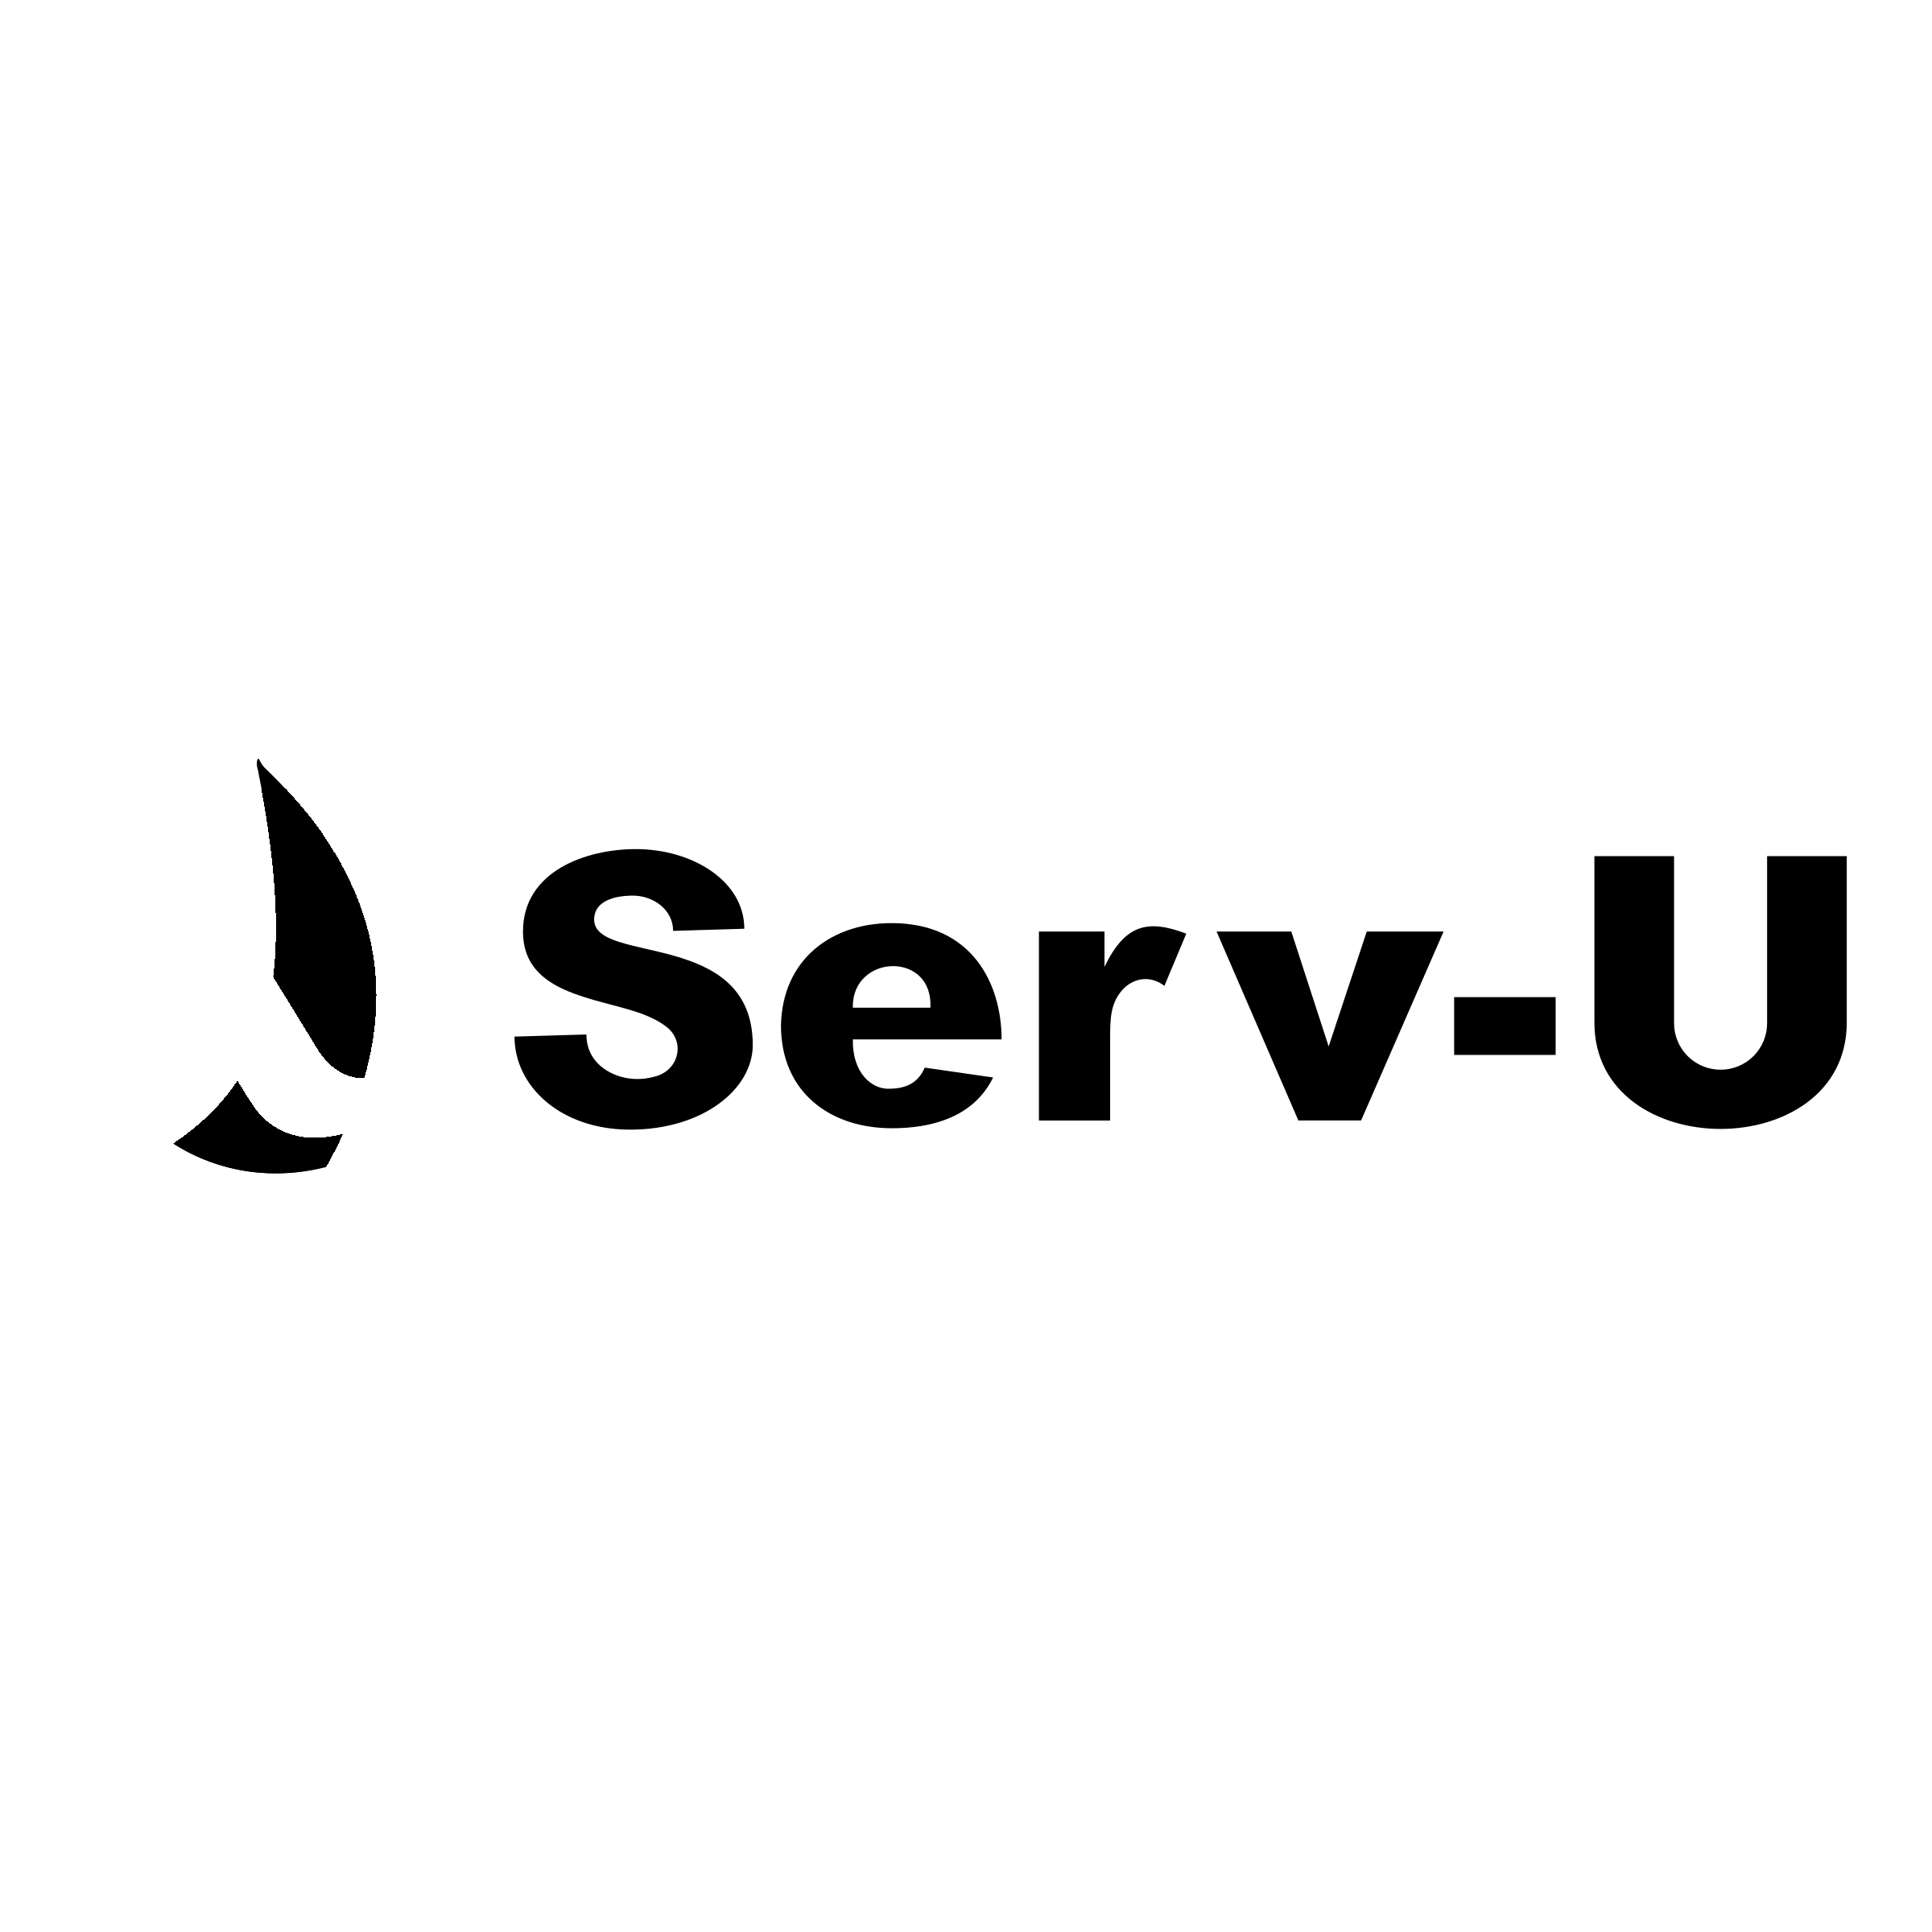 Black Server Logo - Serv U FTP Server Logo PNG Transparent & SVG Vector - Freebie Supply